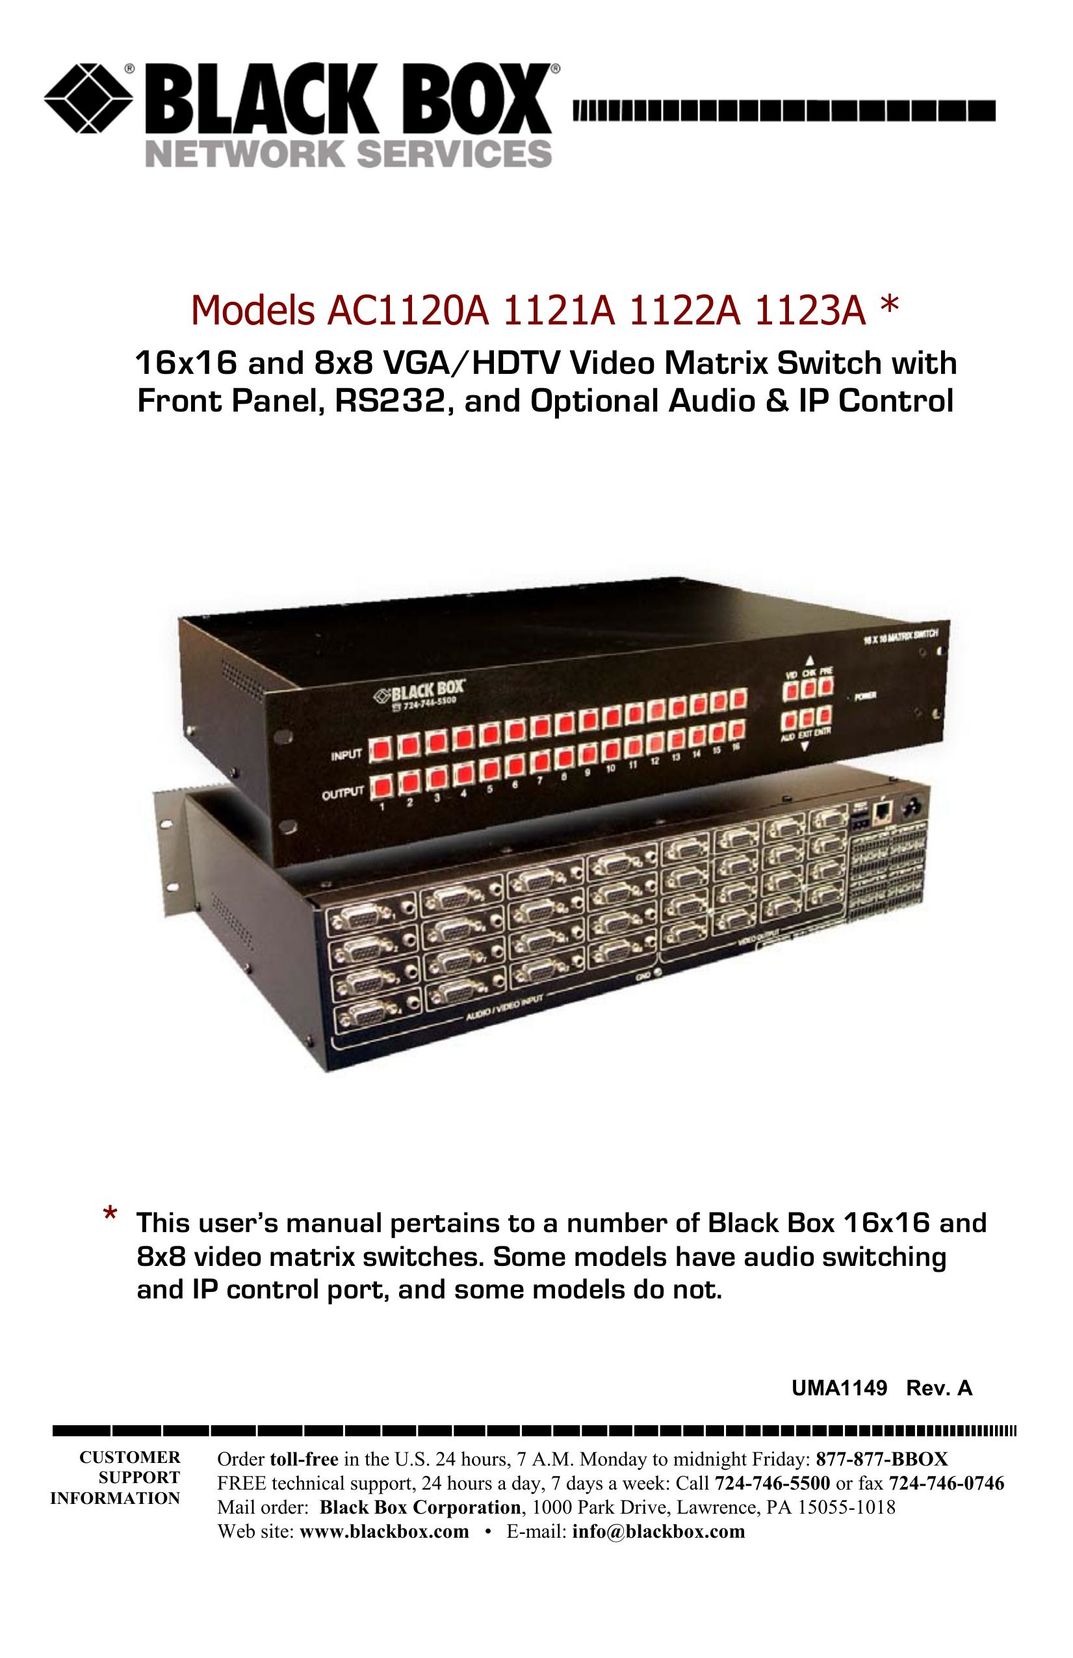 Black Box 1121A TV Video Accessories User Manual